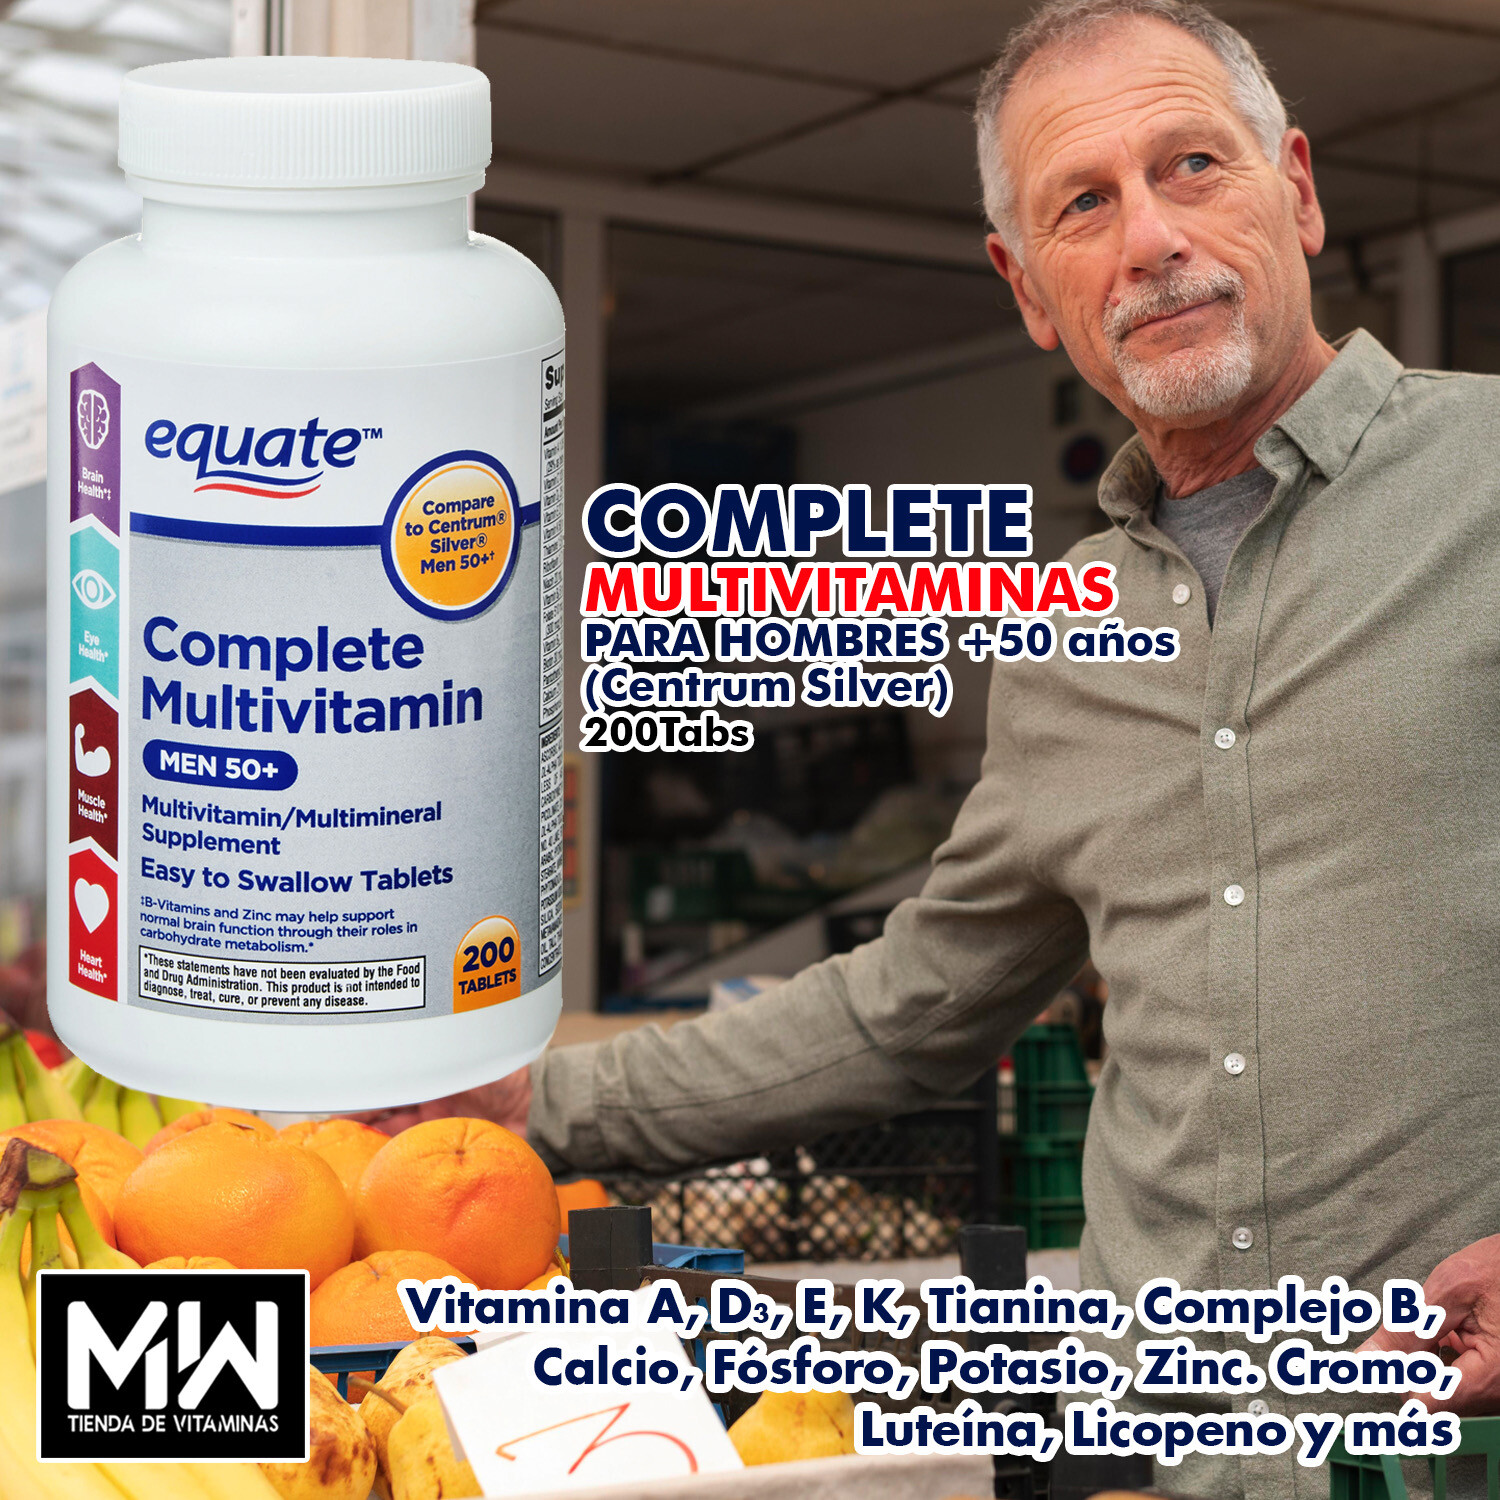 Complete Multi vitaminas 50+ para hombres / Complete Multi vitamin 50+ Men, 200tabs